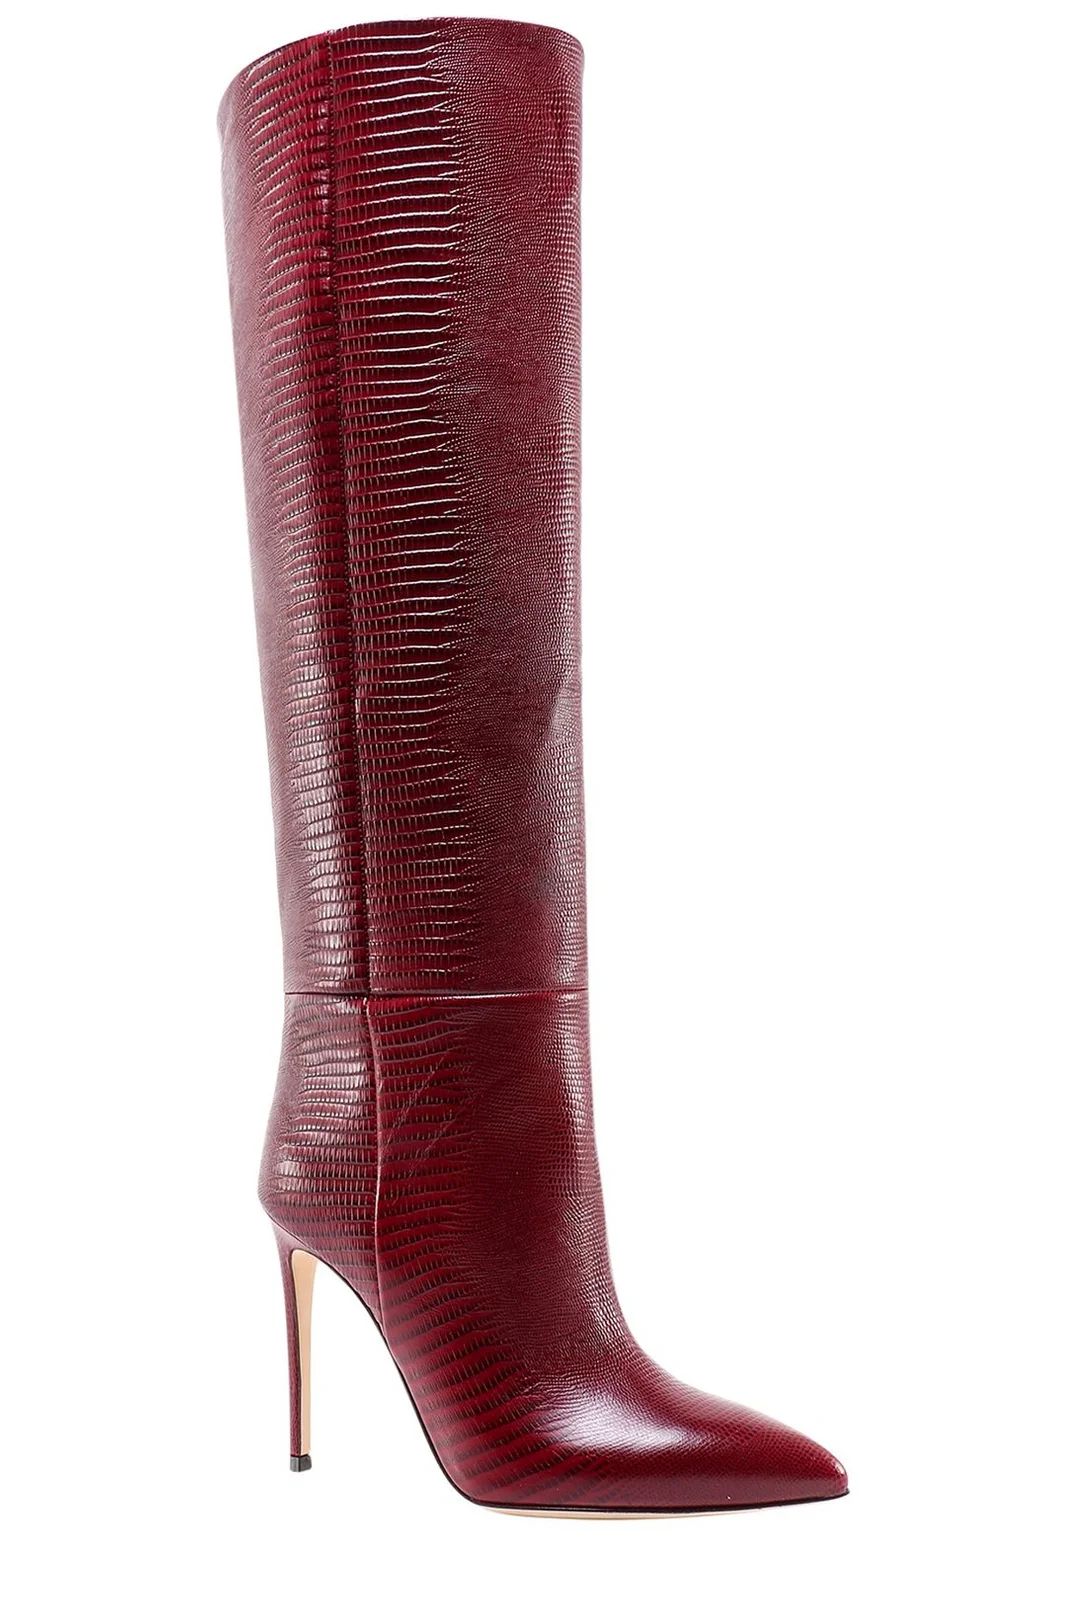 Paris Texas Embossed Knee-High Boots | Cettire Global